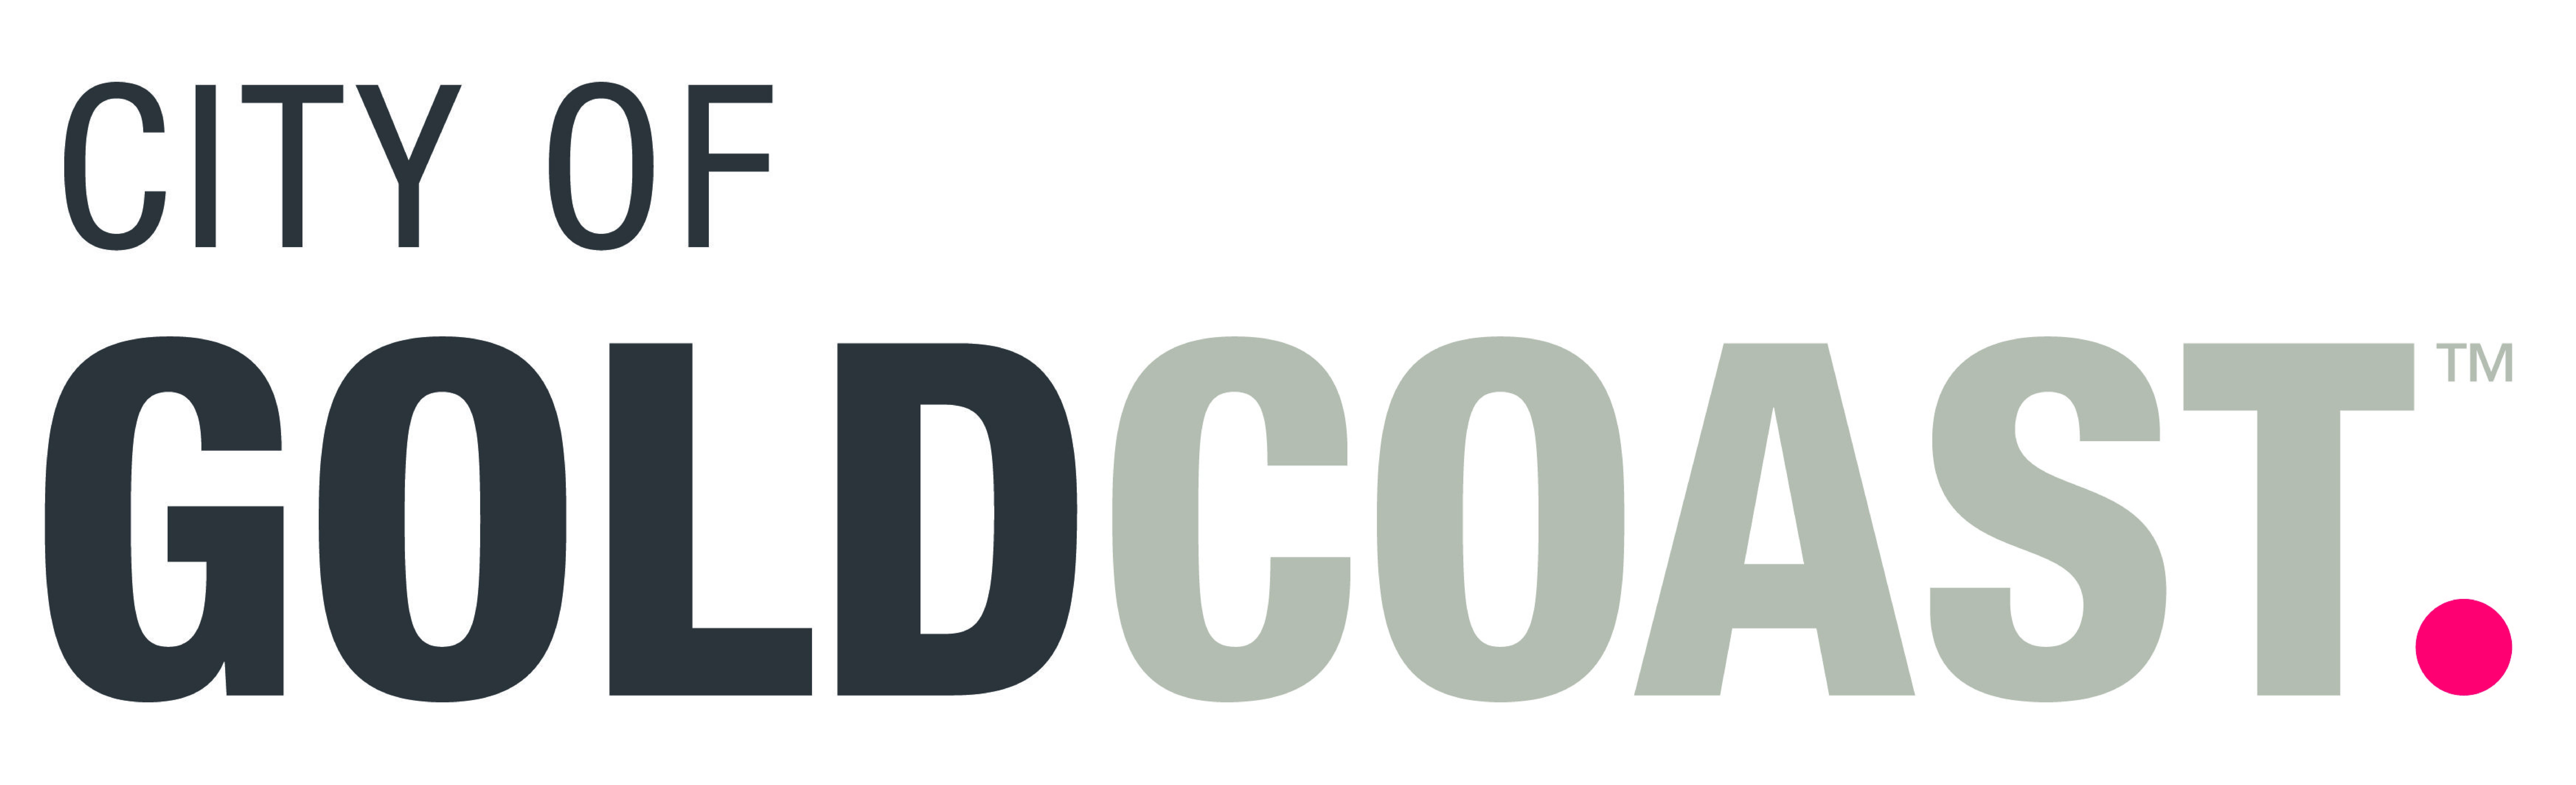 City-of-Gold-Coast-logo.png